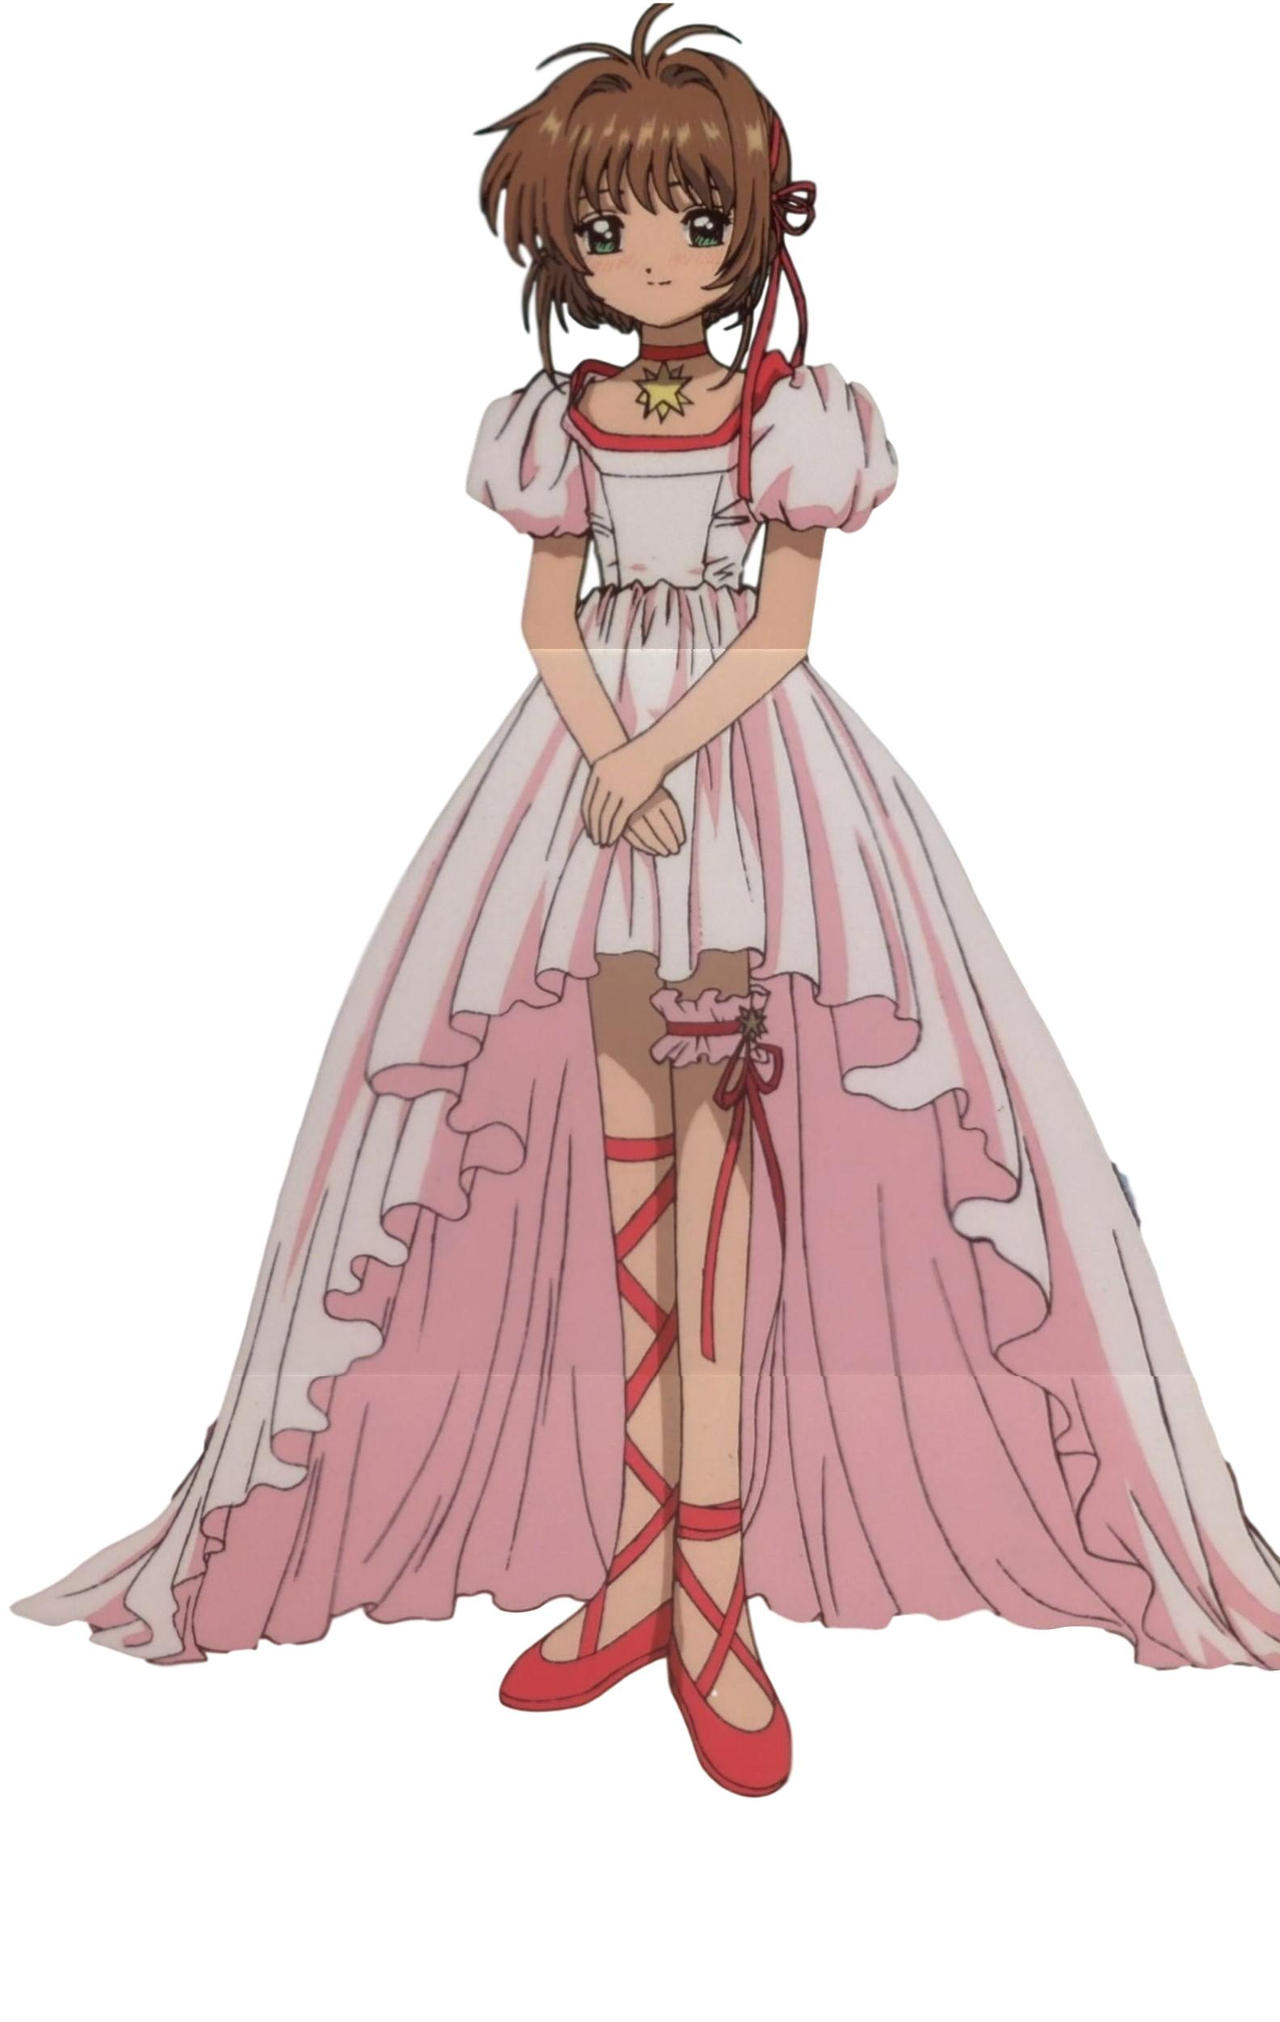 Sakura Princess Dress Full View by RivaAnime on DeviantArt